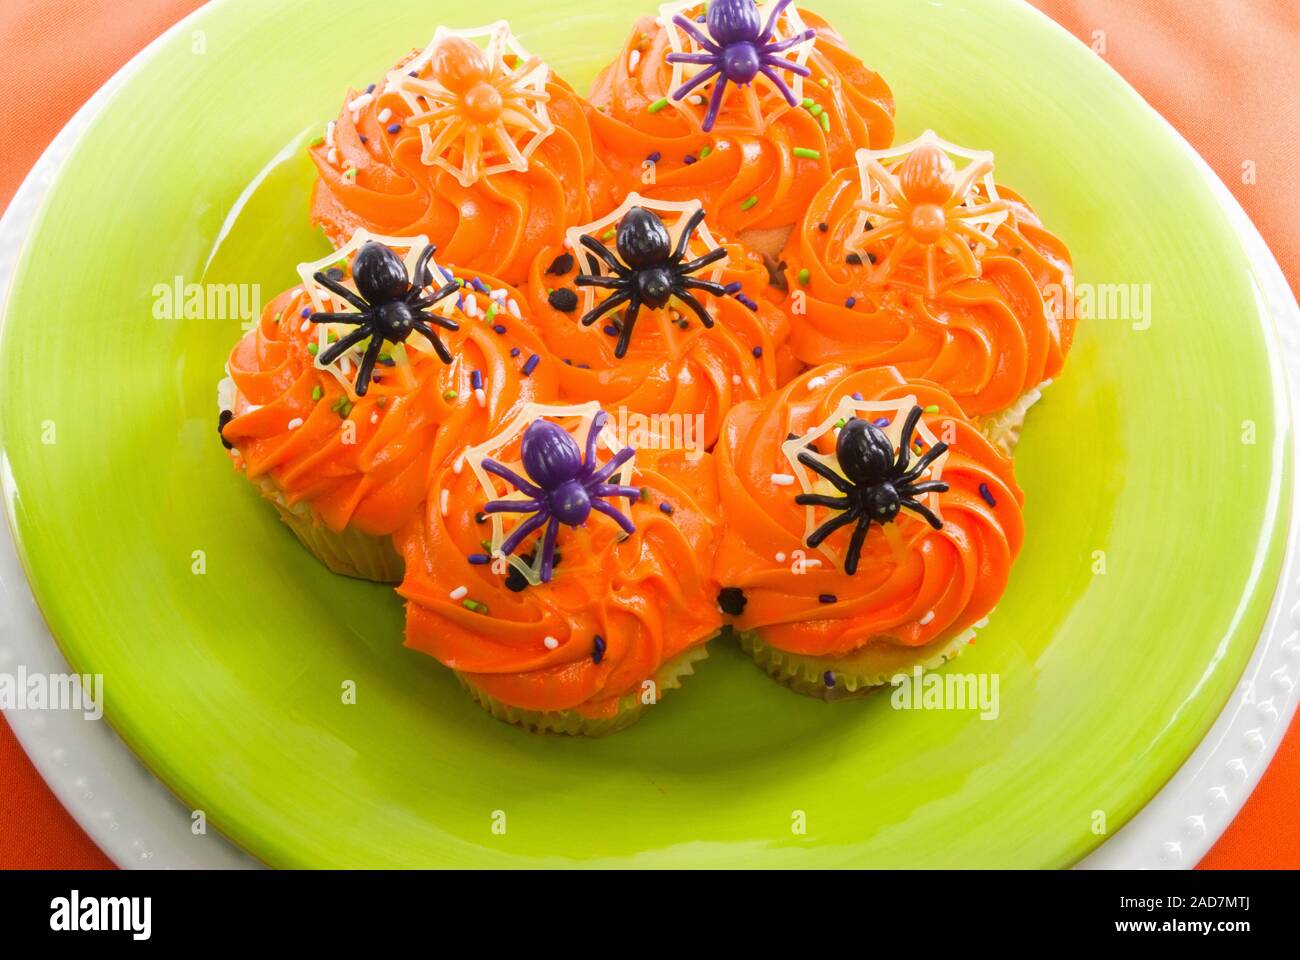 Colorido Halloween cupcakes decoradas con arañas de plástico de juguete verde lima, servido en un plato con un fondo de color naranja. Foto de stock